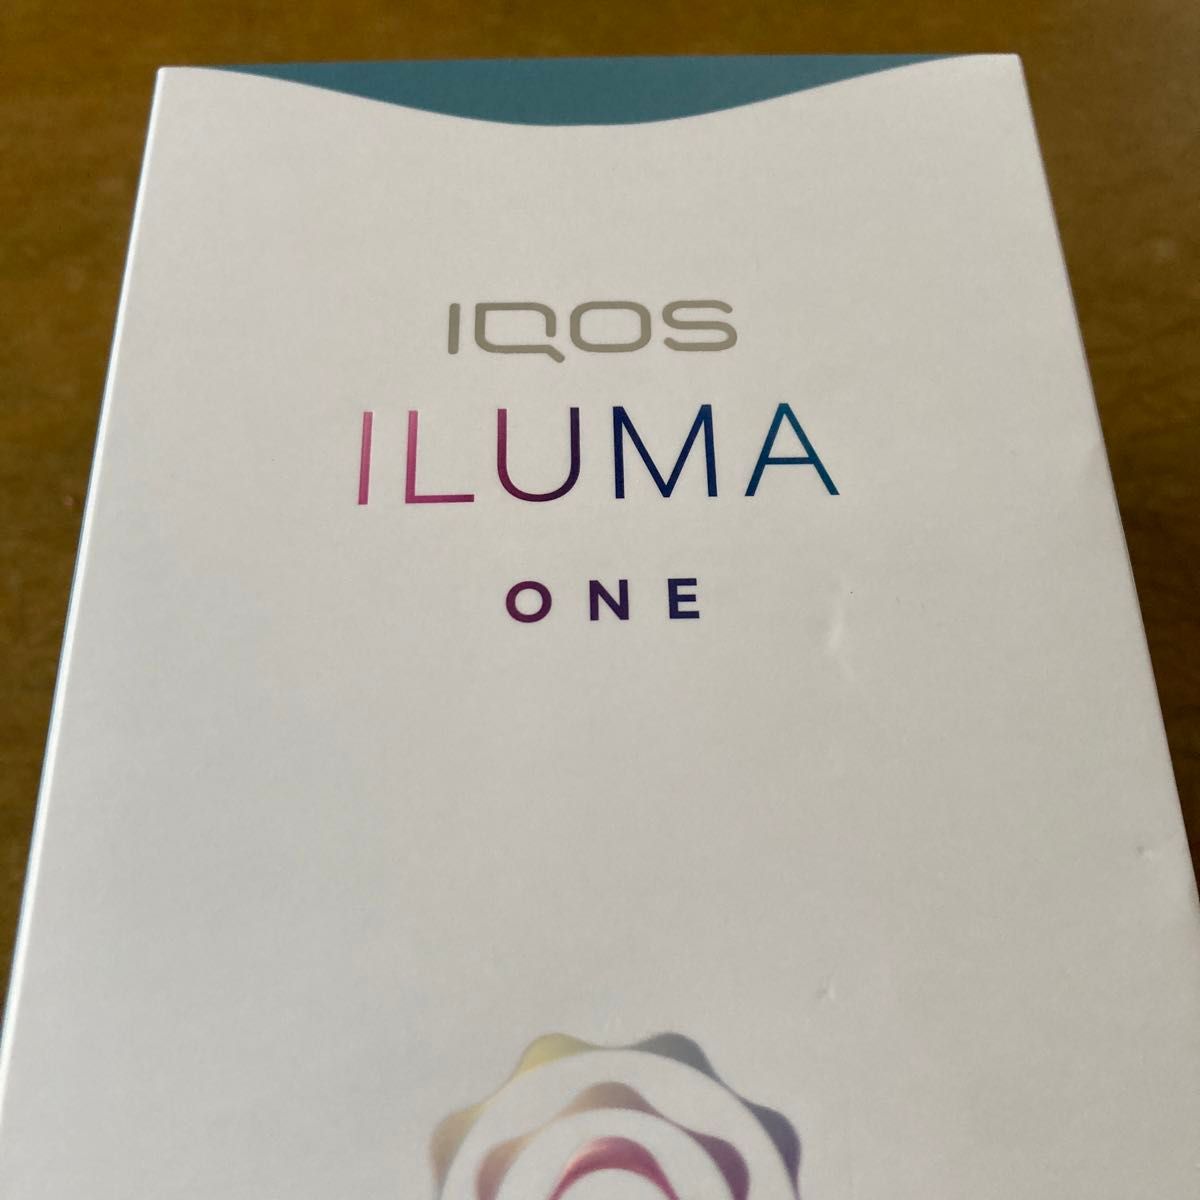 IQOS ILUMA ONE アイコス イルマ ワン アズールブルー　新品未開封を解体して箱無し発送です